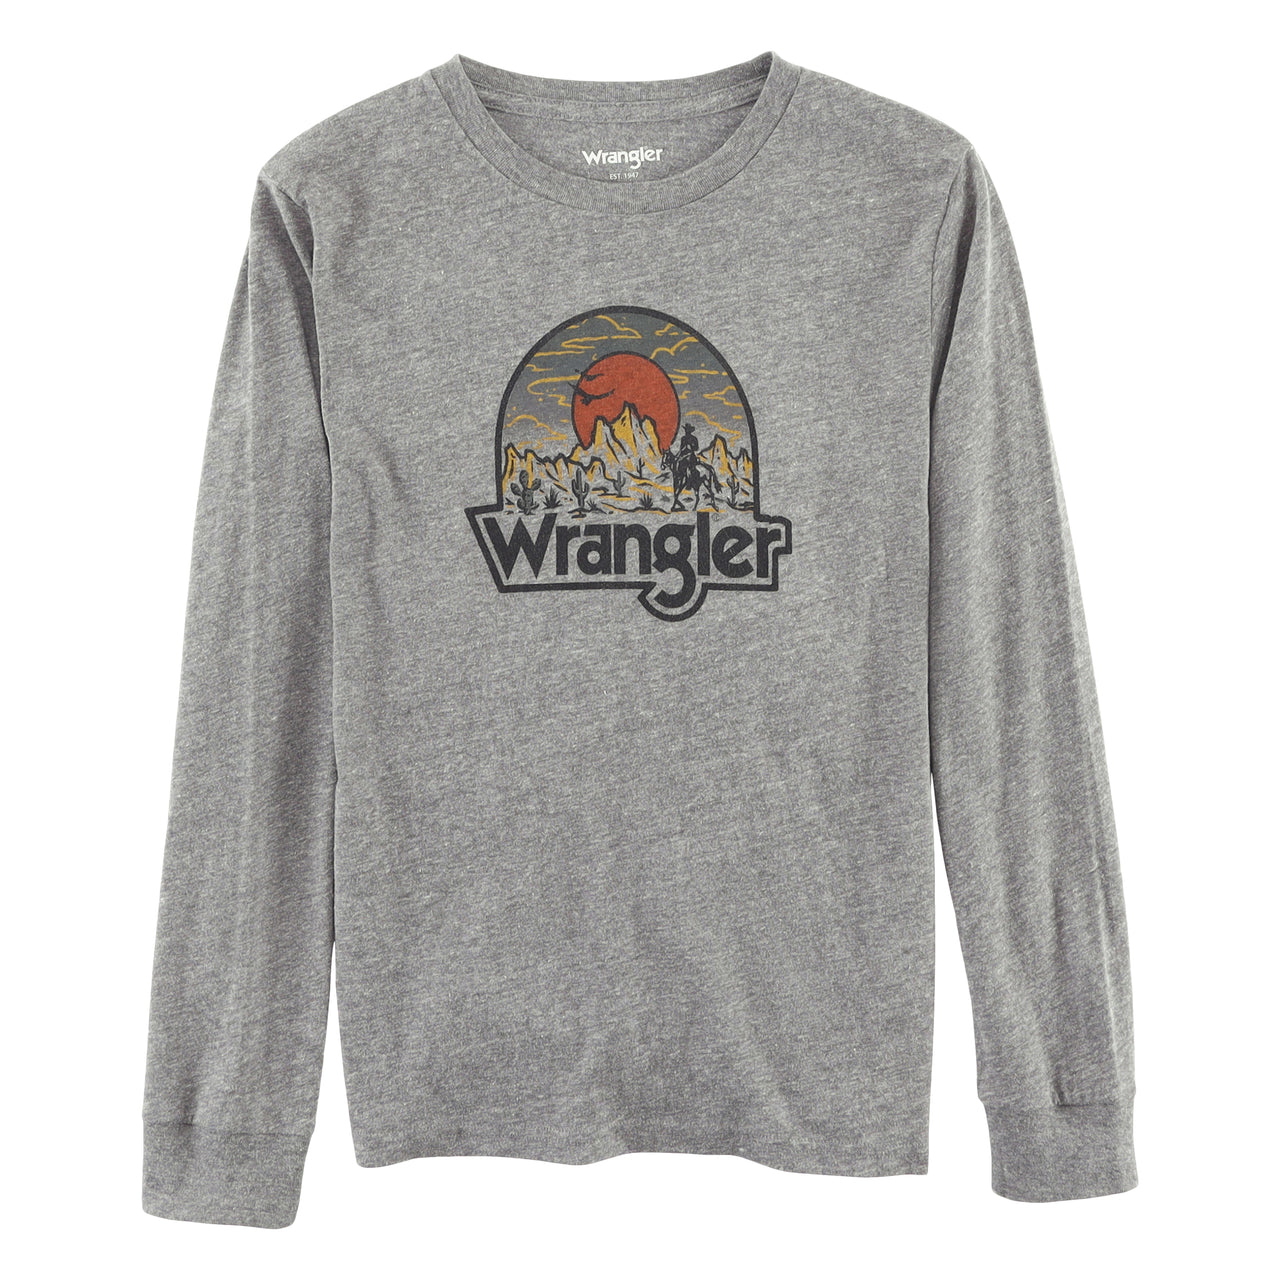 Wrangler Boy's Long Sleeve T-Shirt - Grey